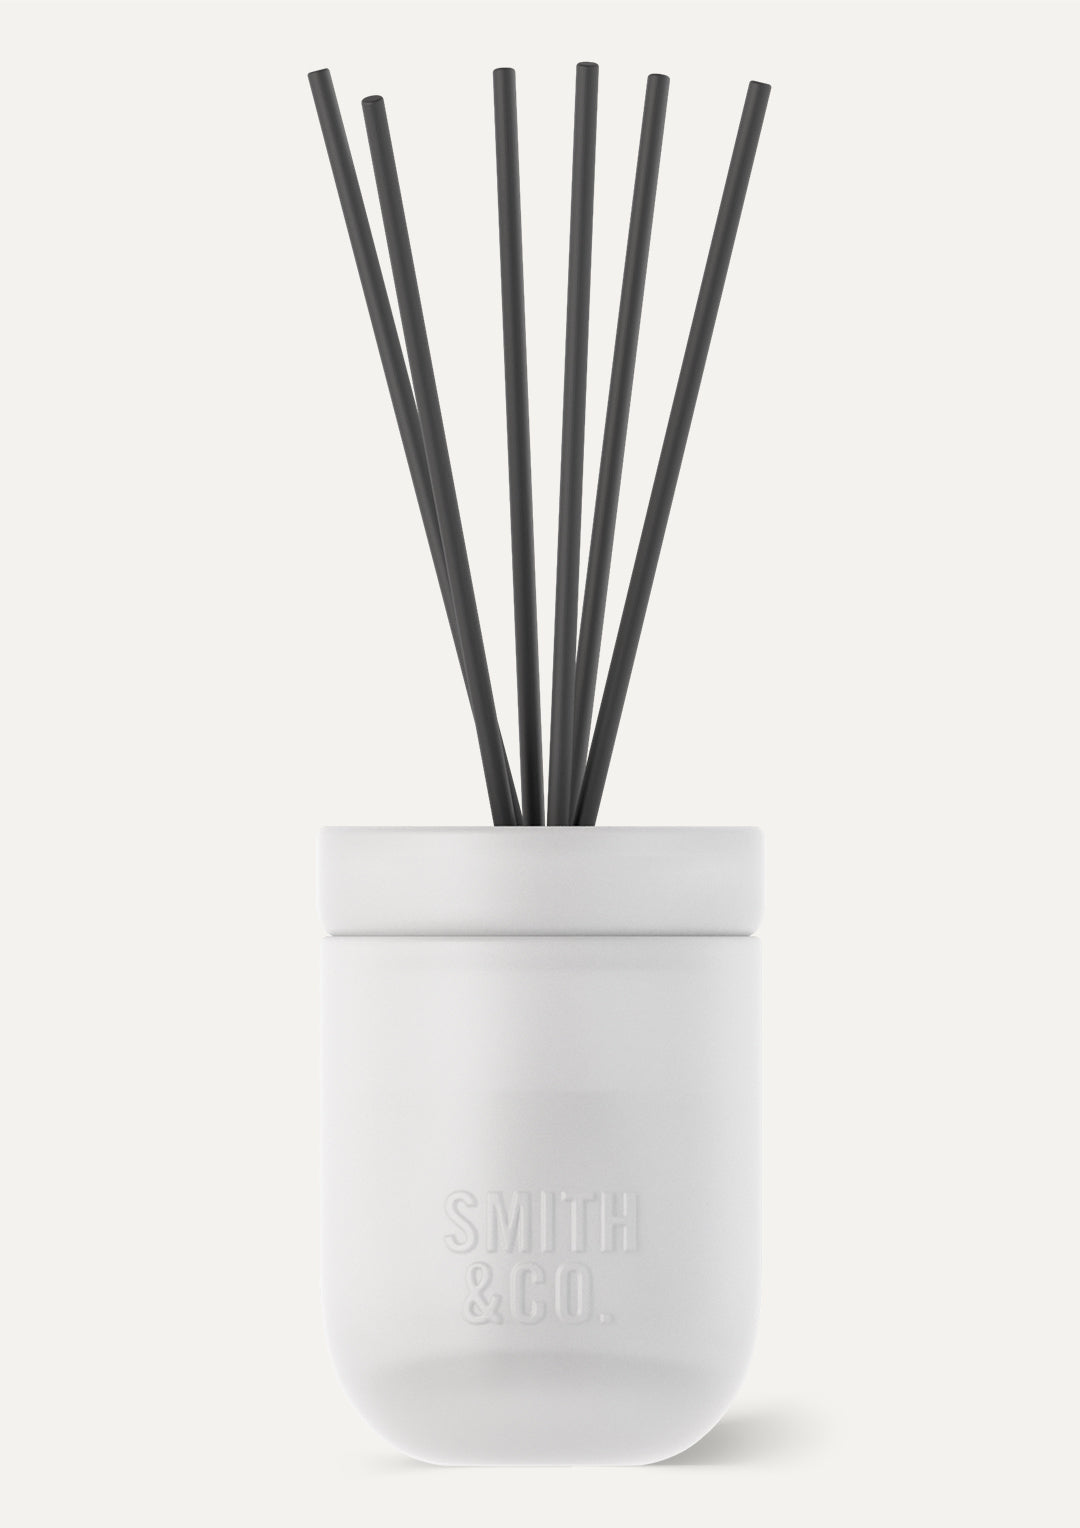 Smith & Co. Diffuser 200ml - Tonka & White Musk